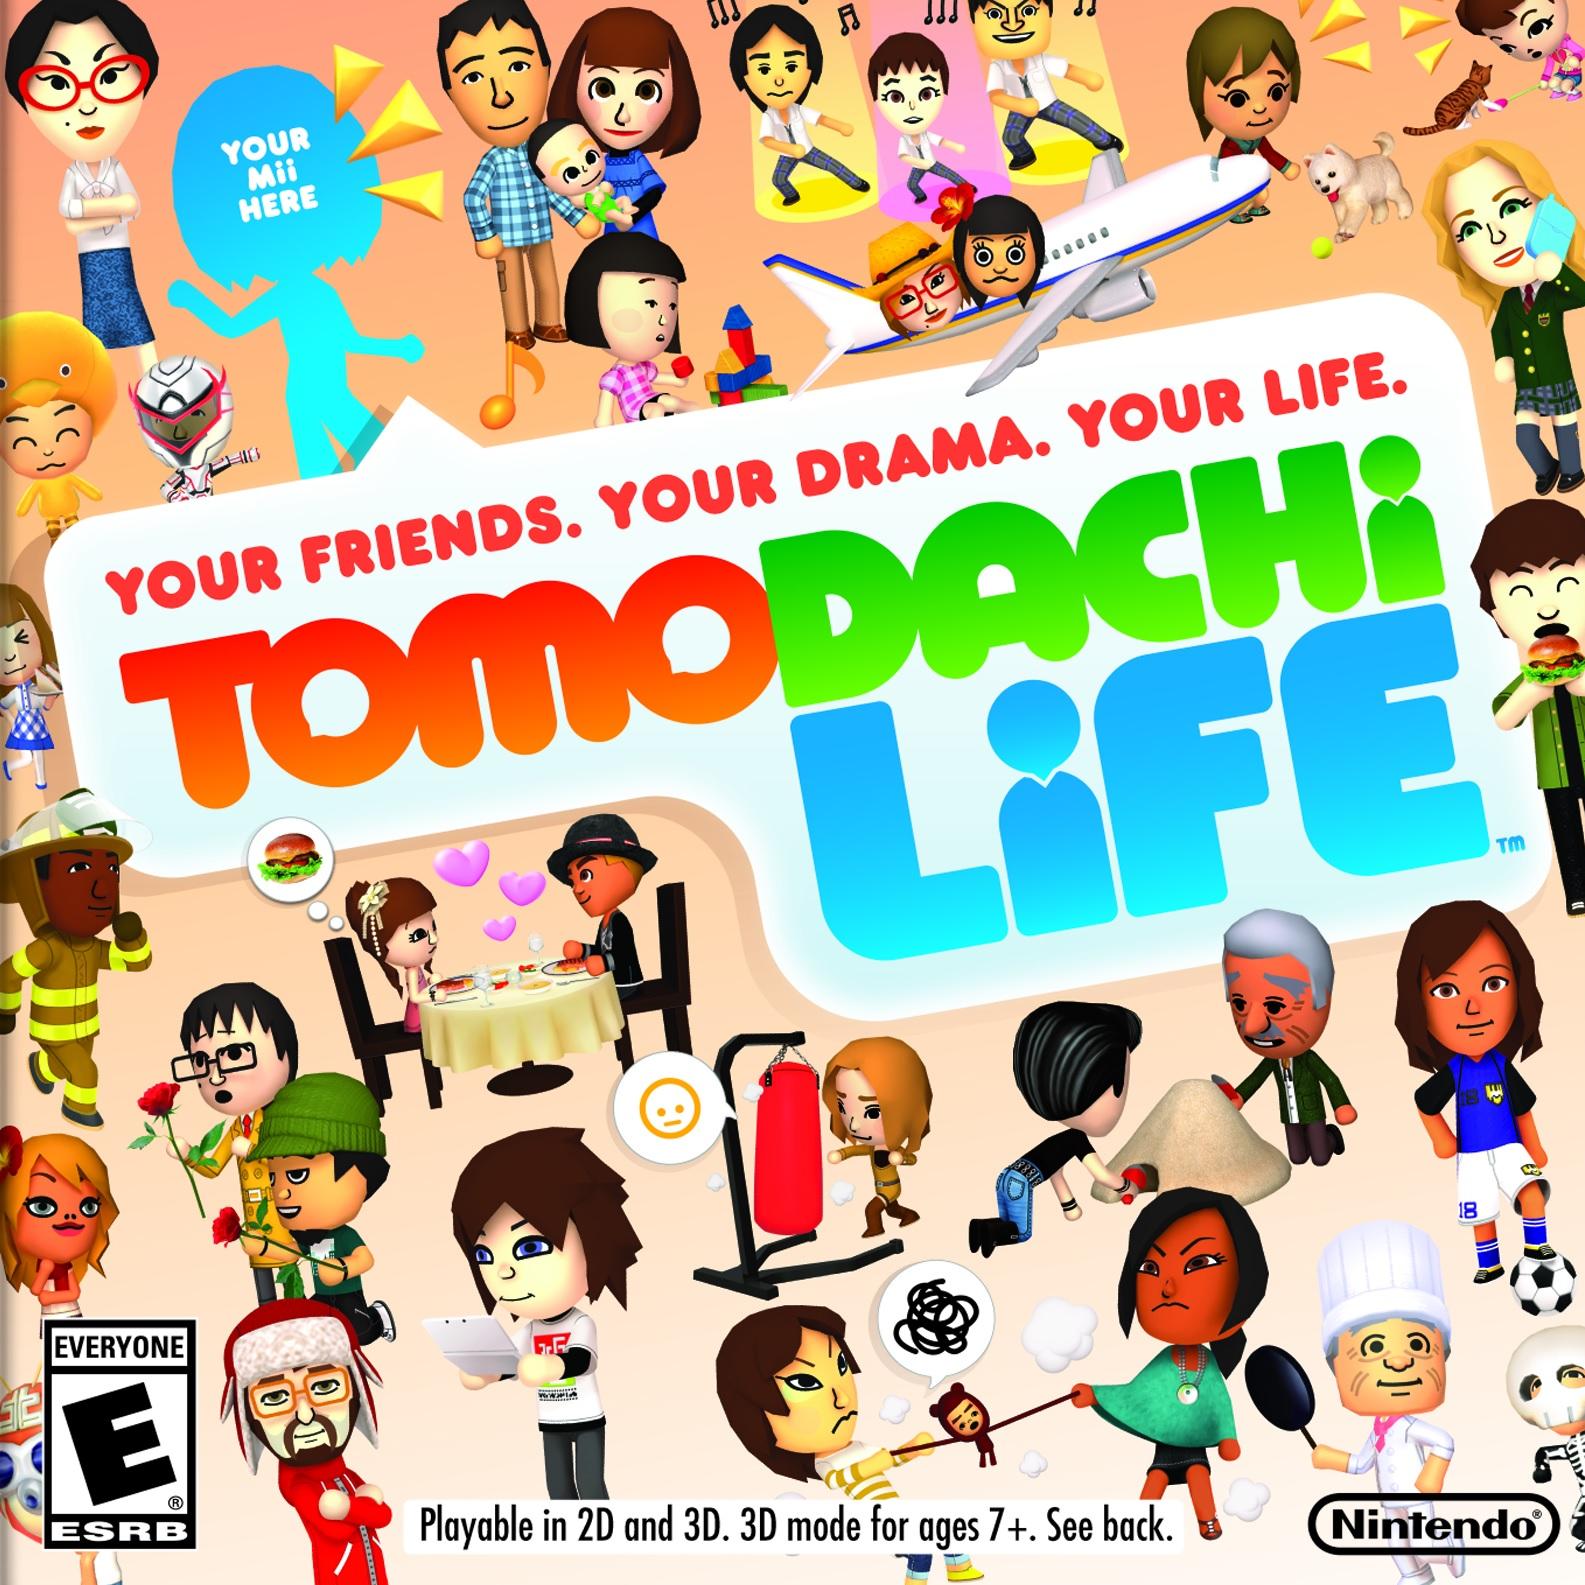 tomodachi life english version download code pc